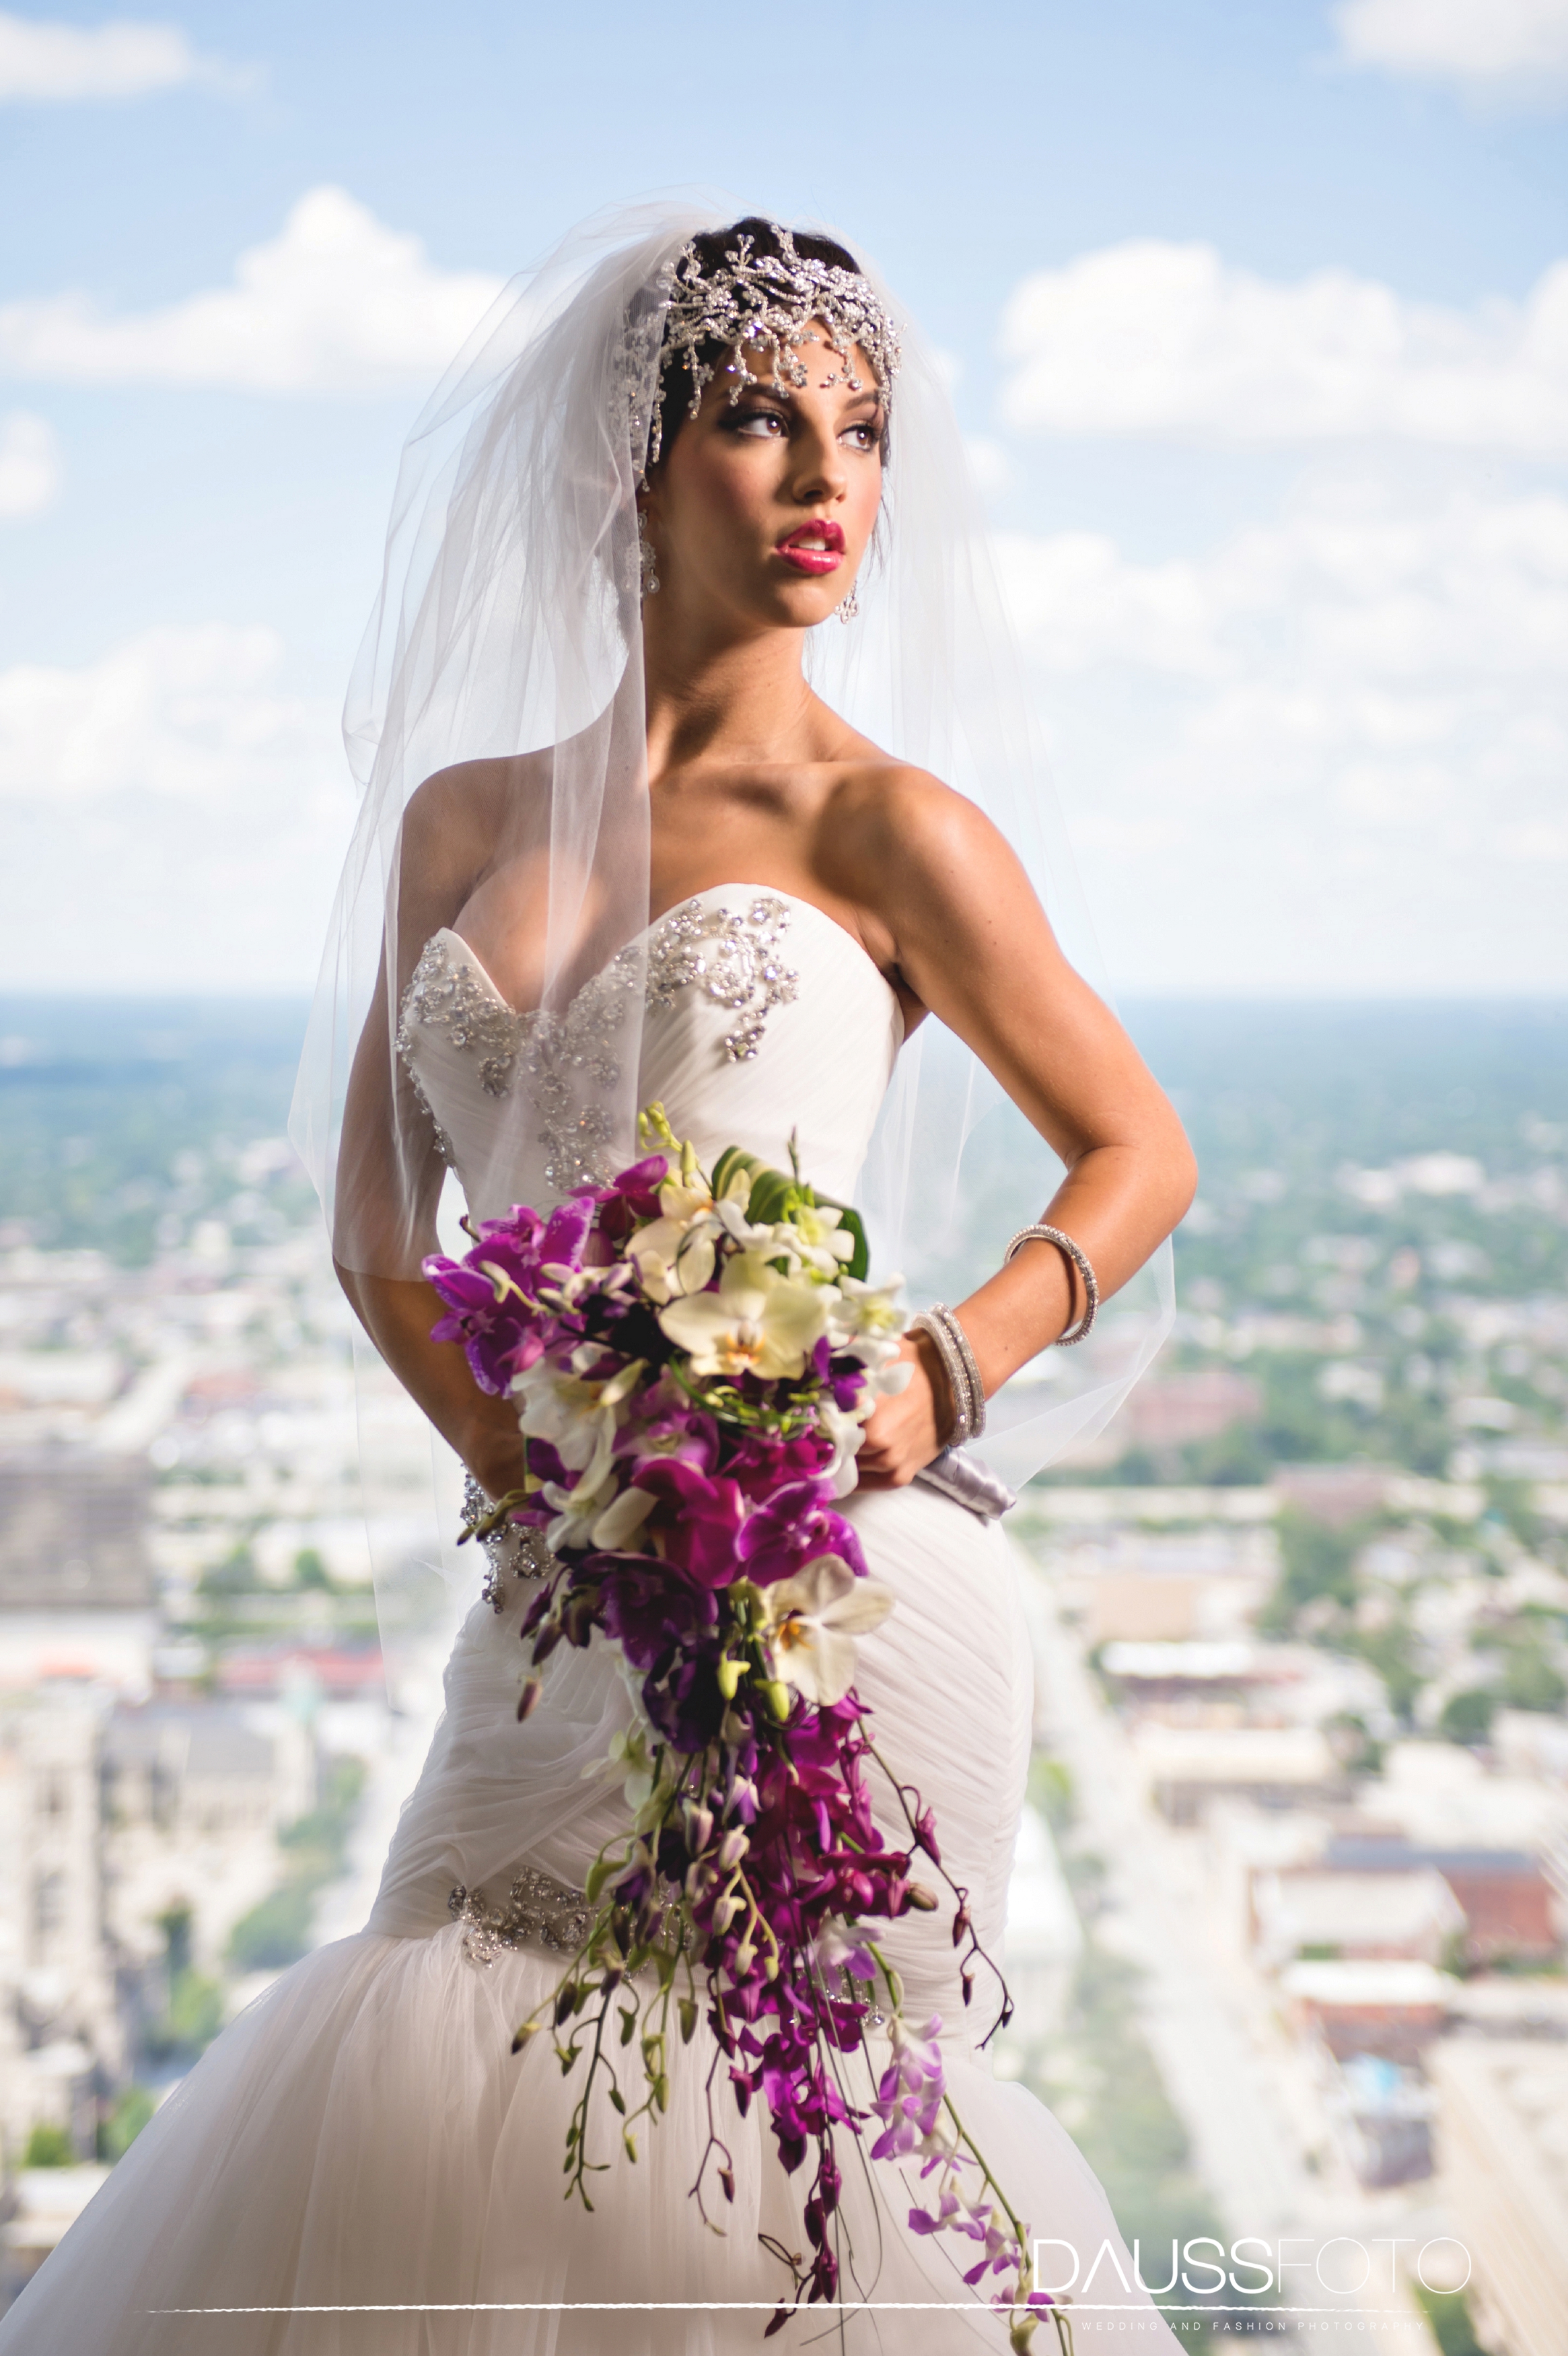 DaussFOTO_20150721_023_Indiana Wedding Photographer.jpg